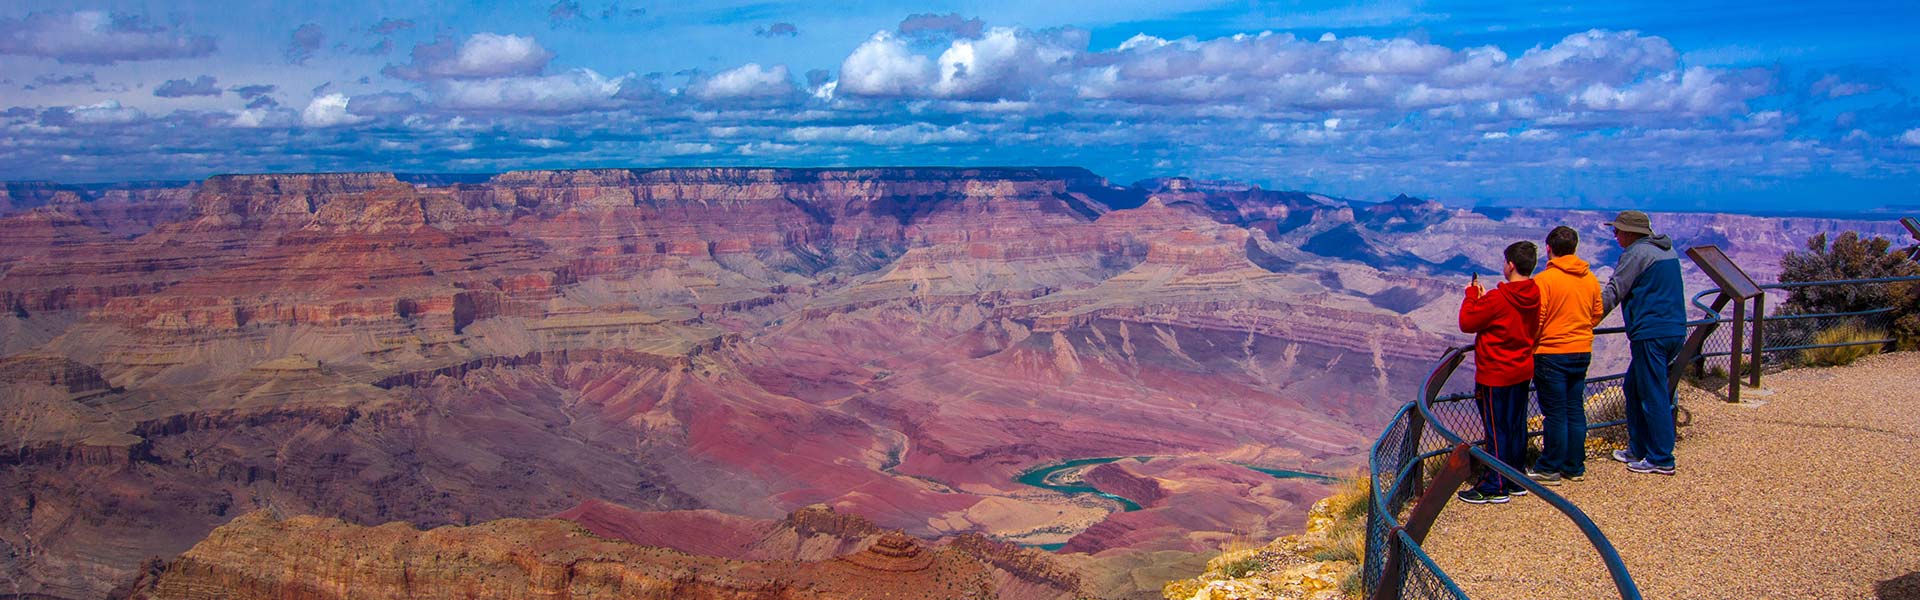 Grand Canyon Van Tours